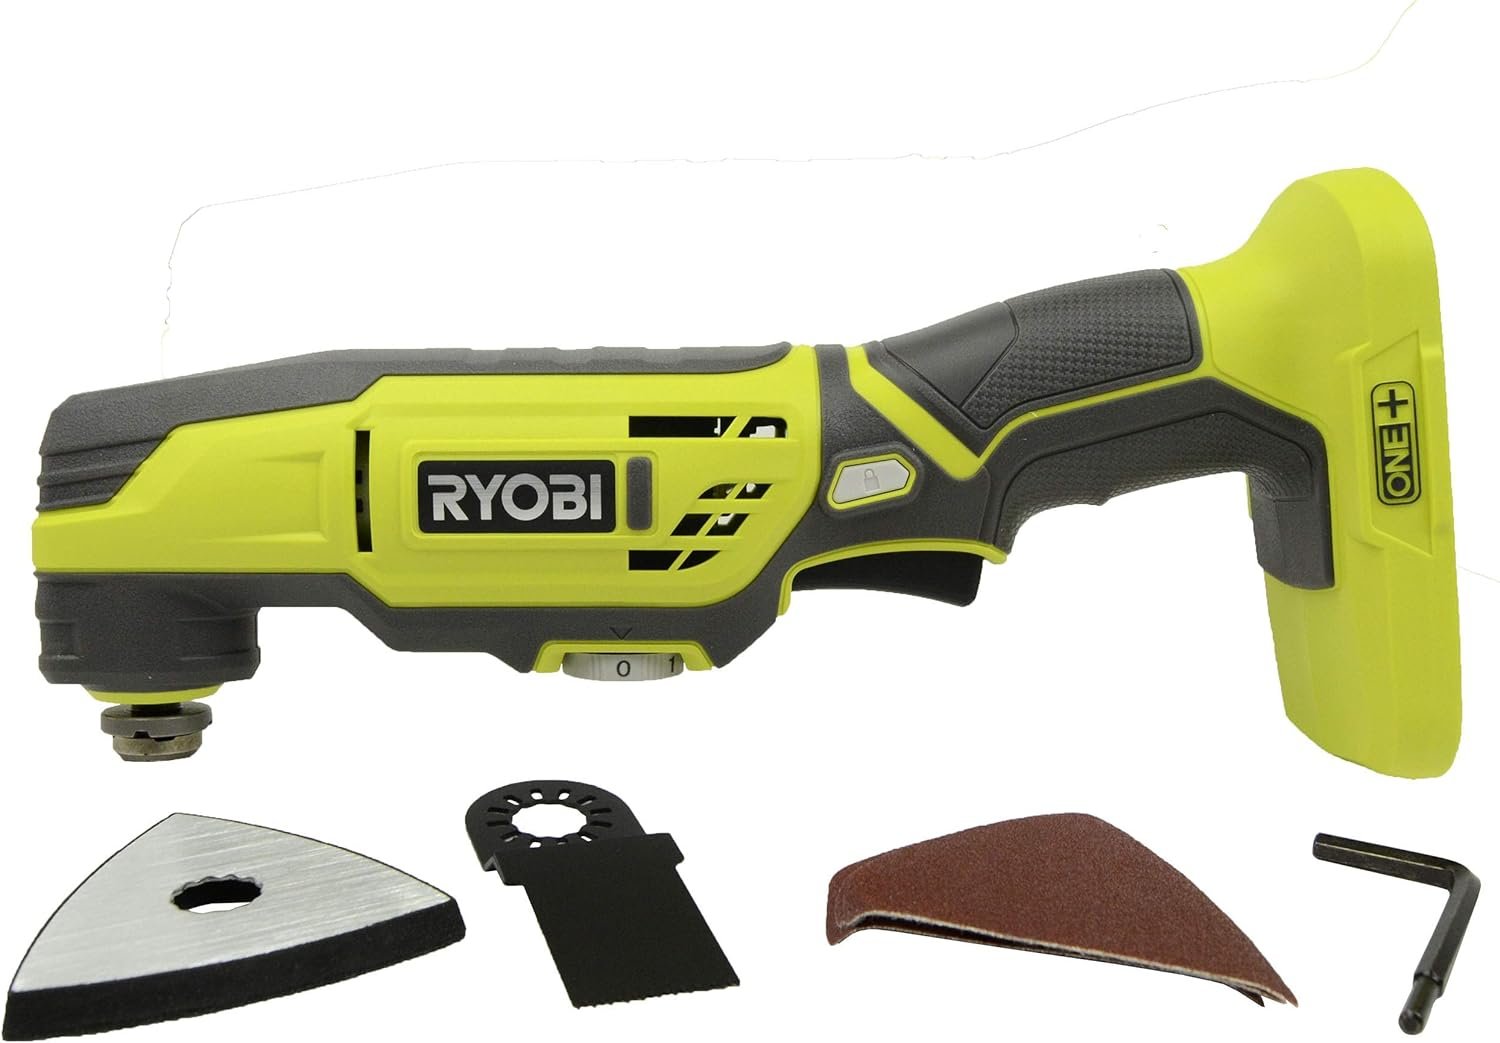 Ryobi P343 Cordless Oscillating Multi-Tool Review